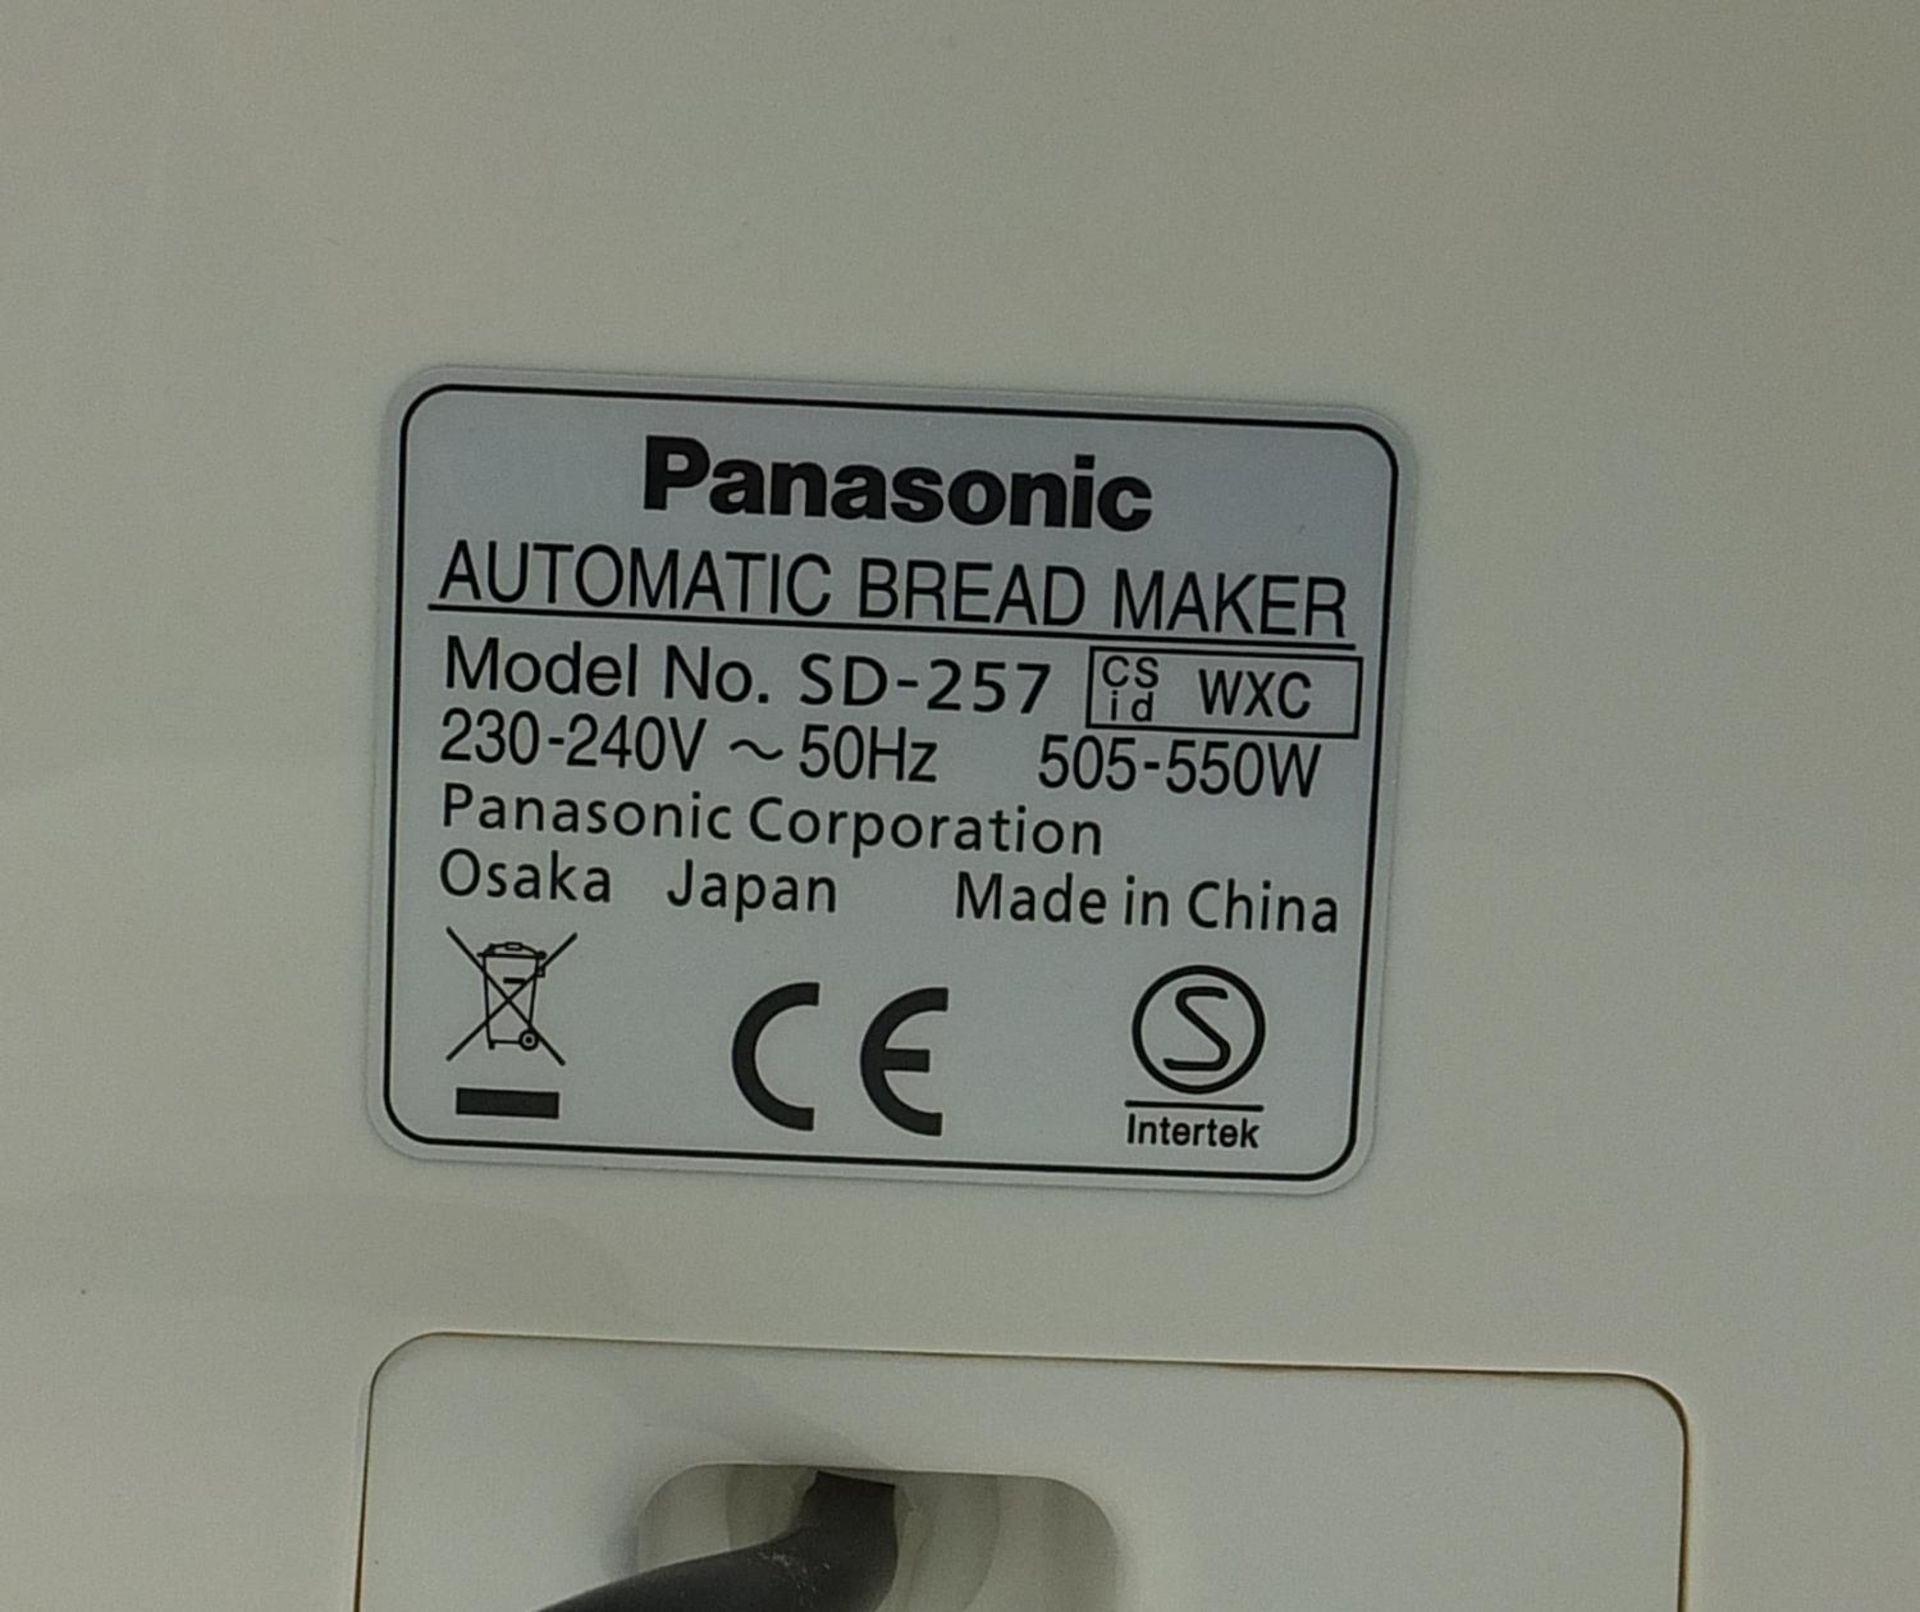 Panasonic bread maker - Image 3 of 3